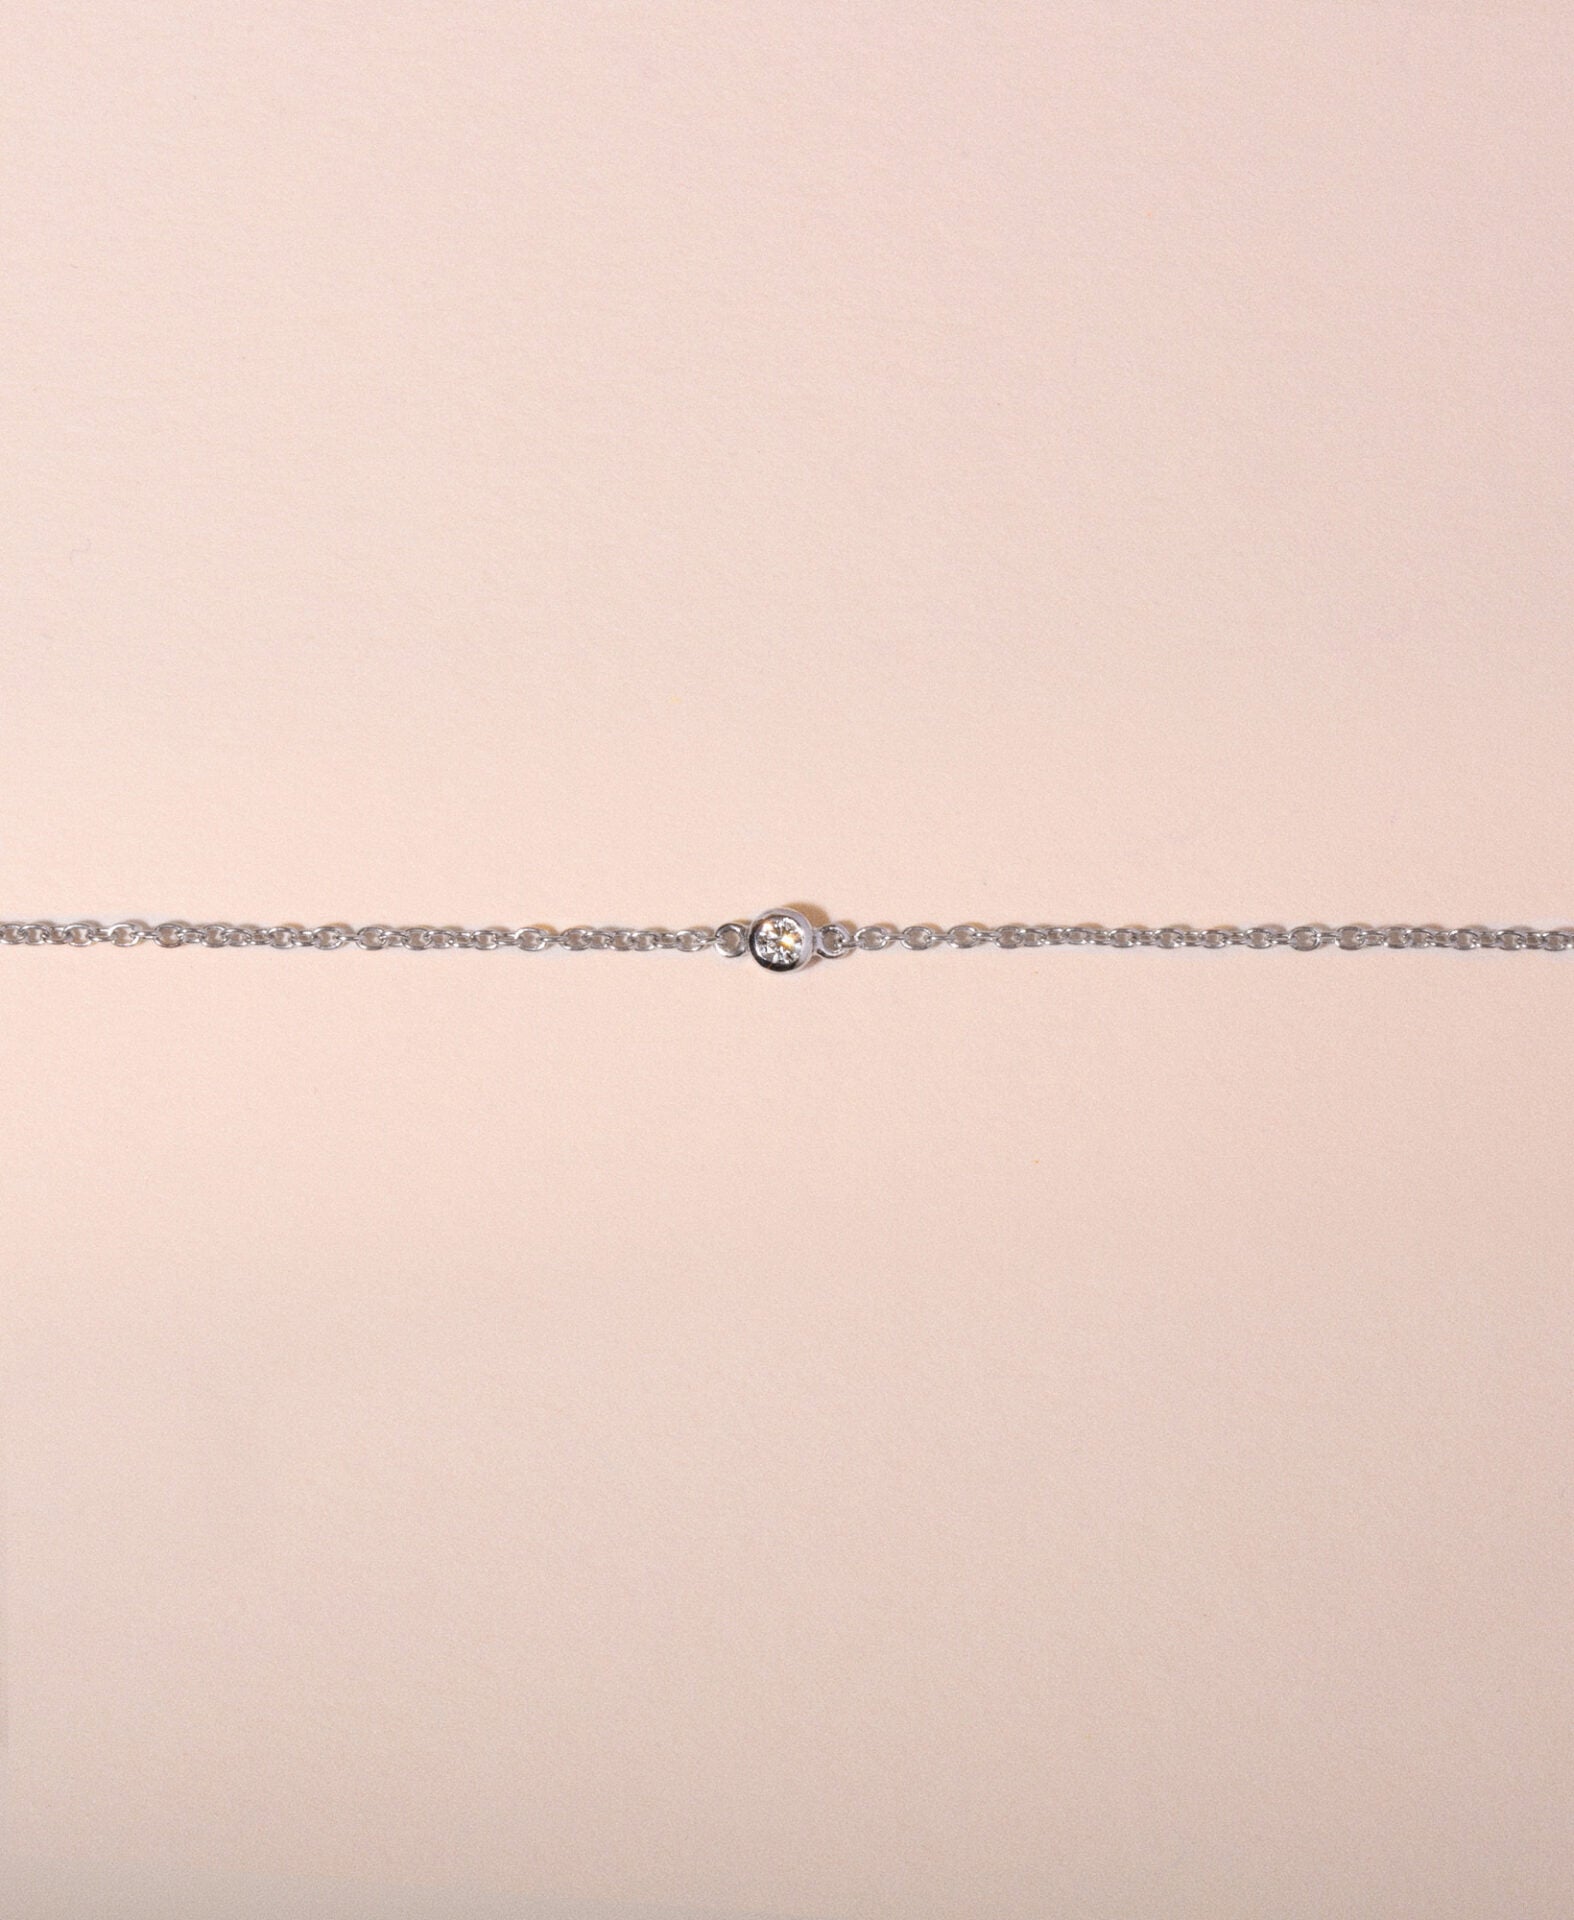 Single diamond bracelet petite